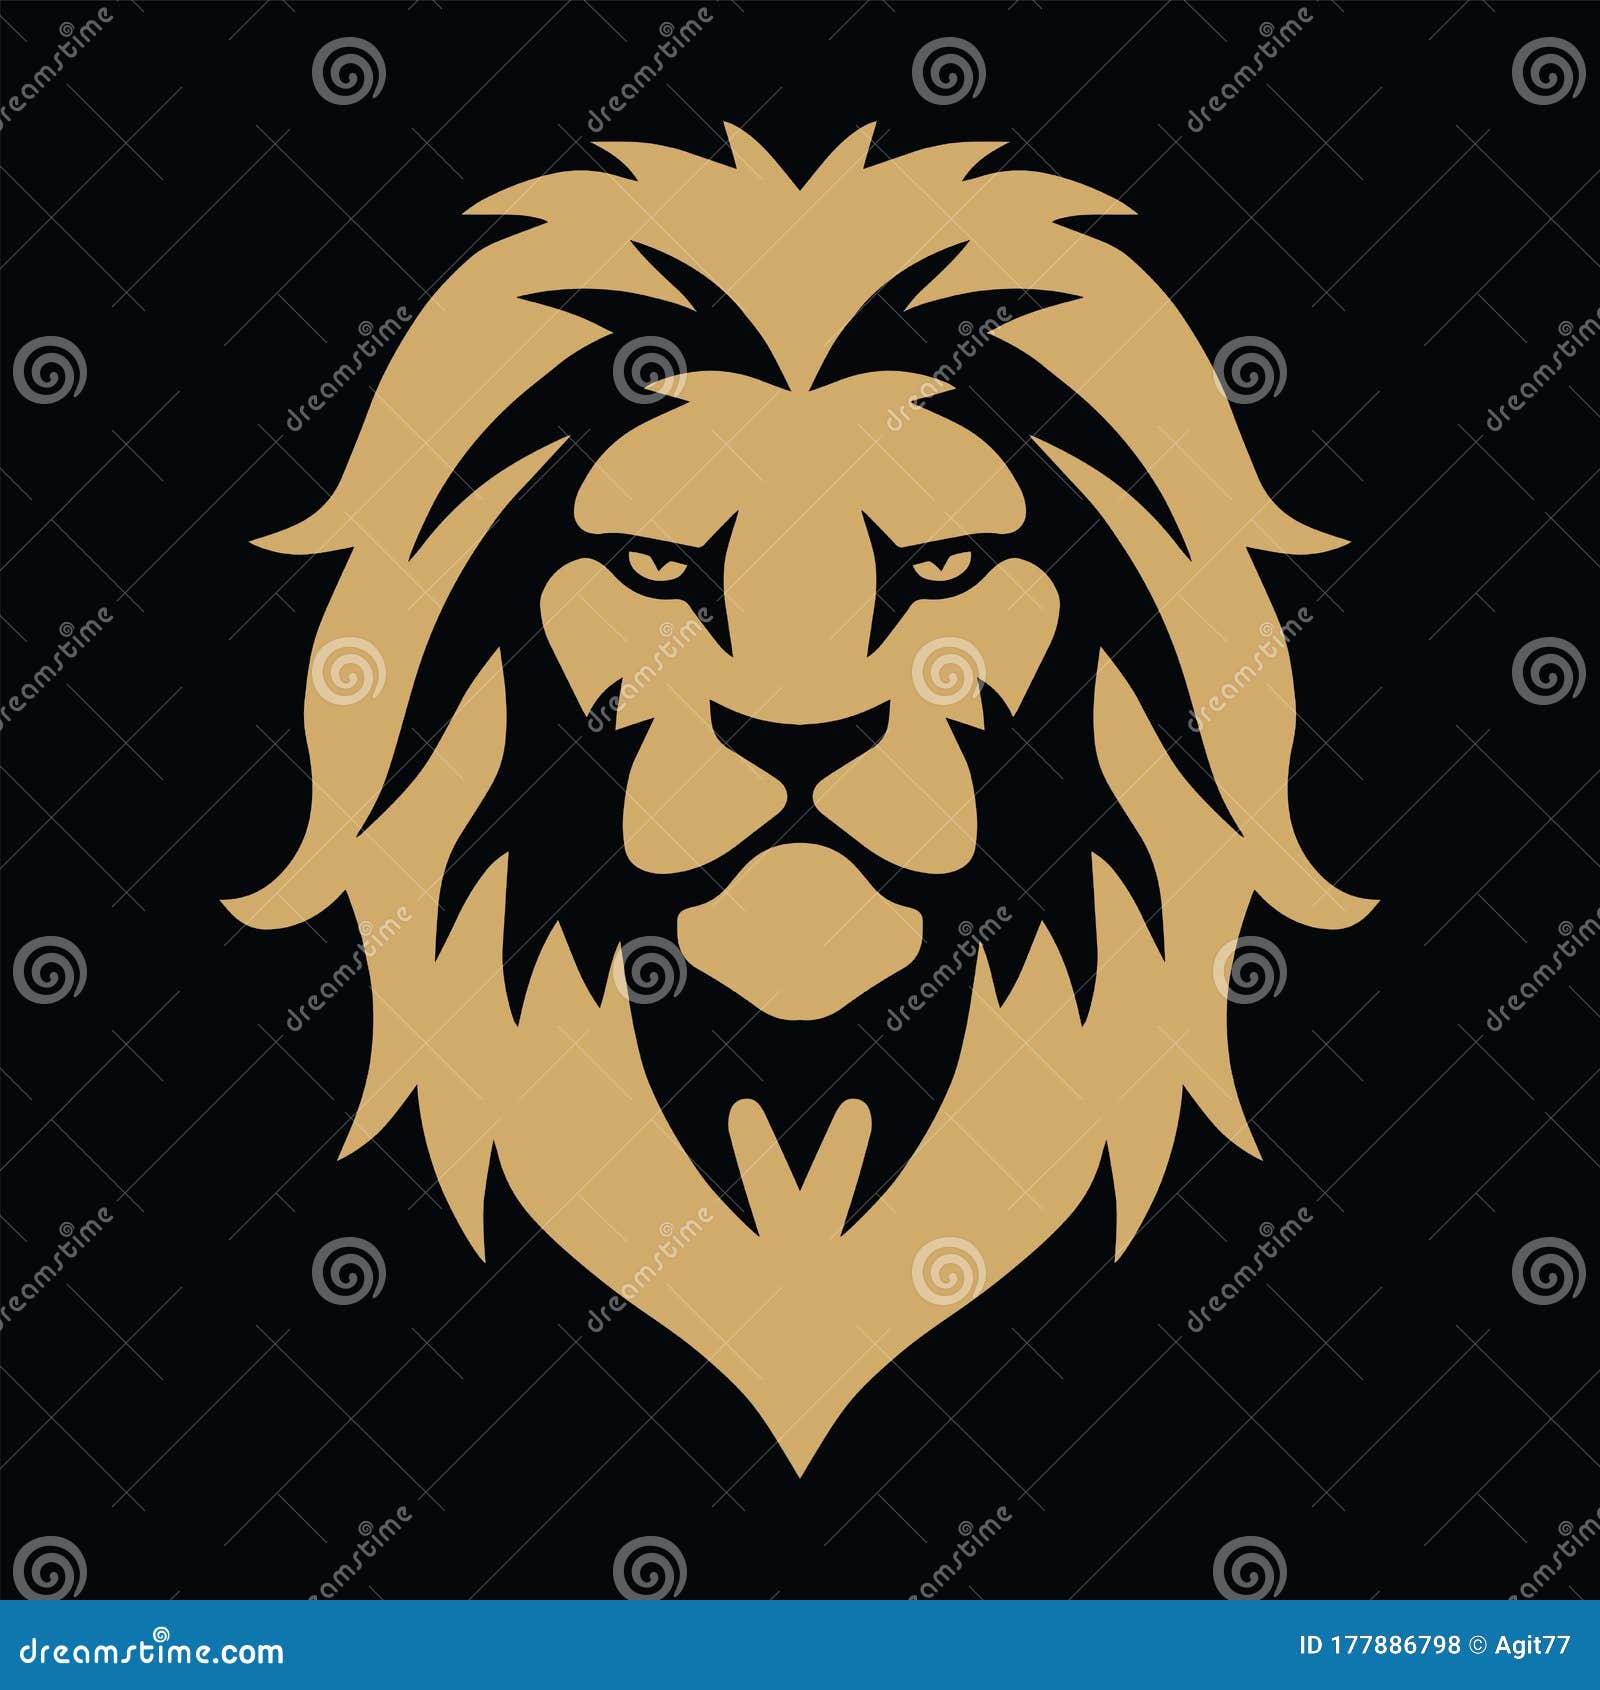 Black golden lion logo